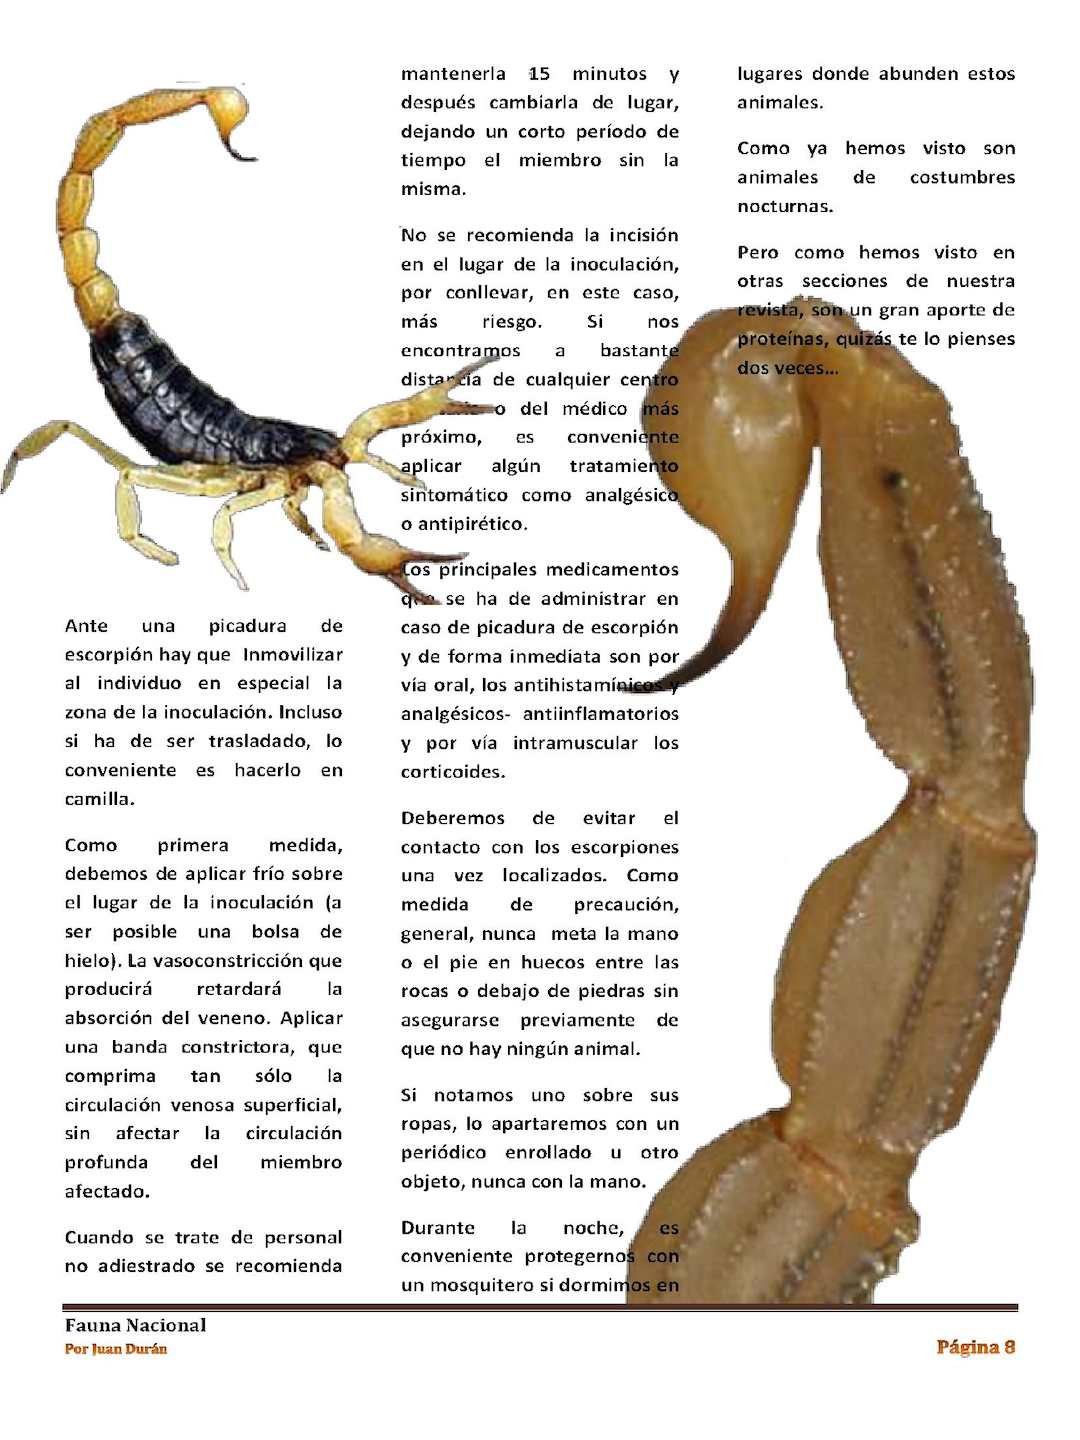 el dulce veneno del escorpion libro pdf siendo